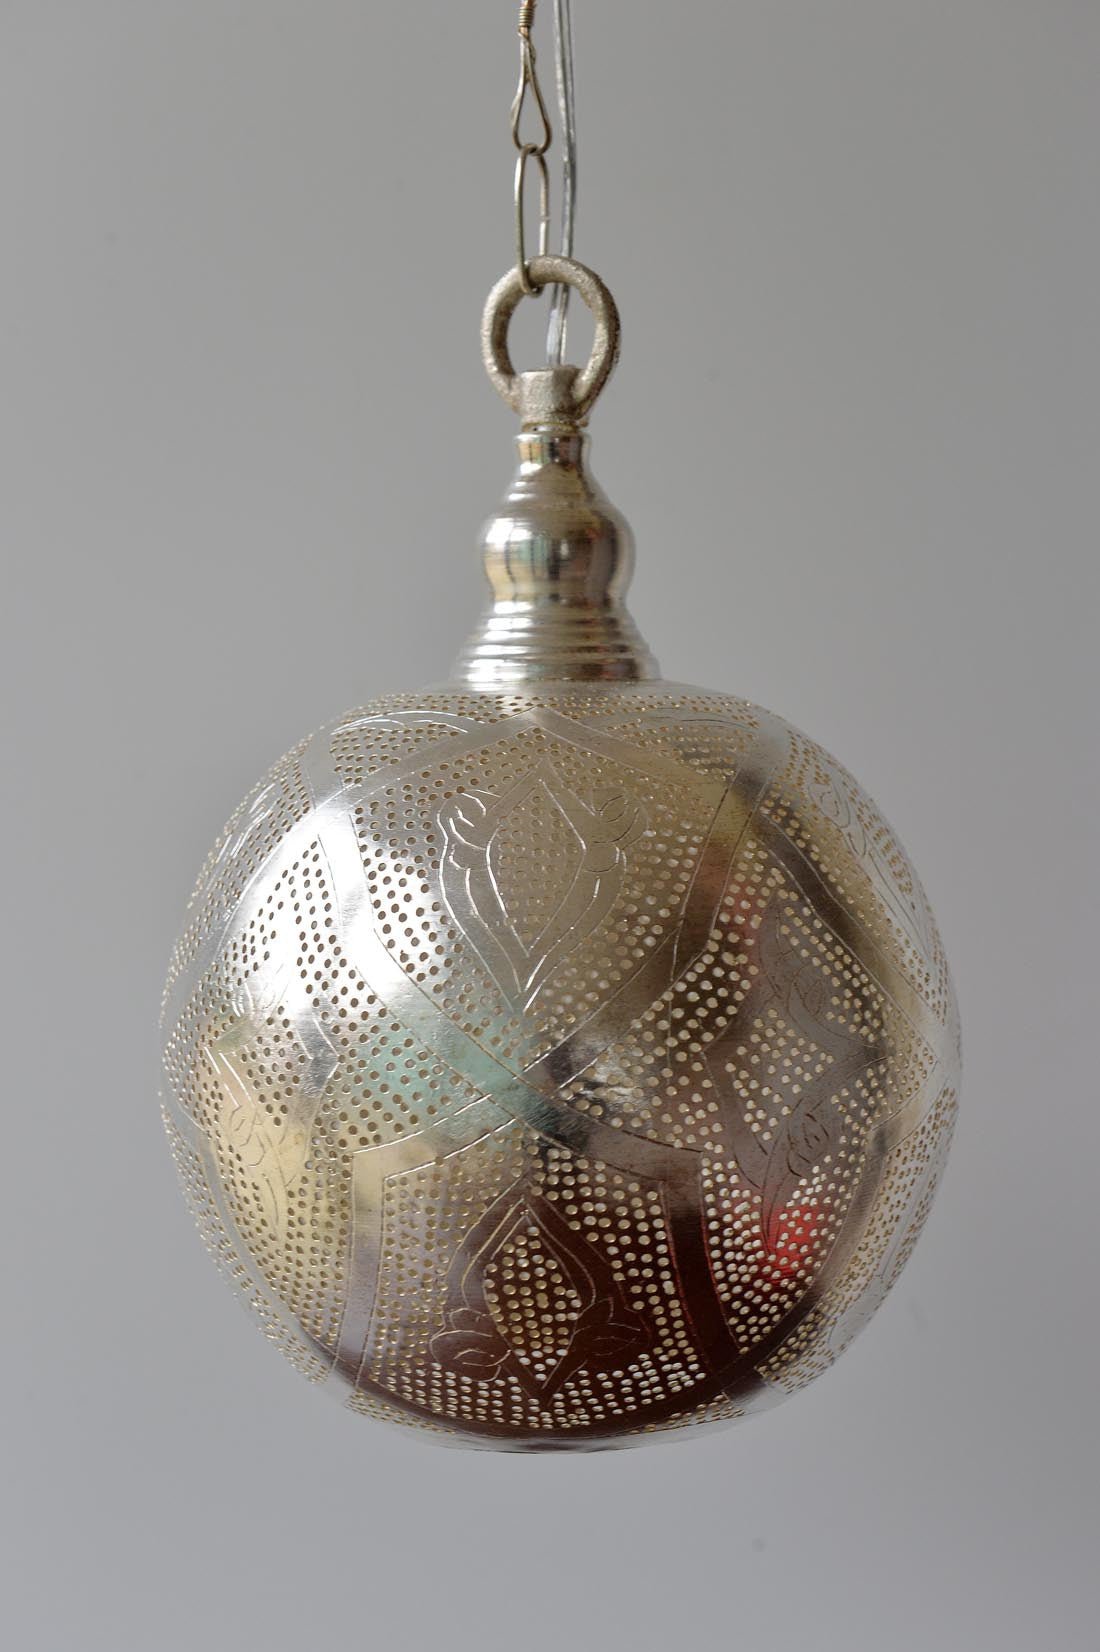 Small silver pendant light - Natalia Willmott